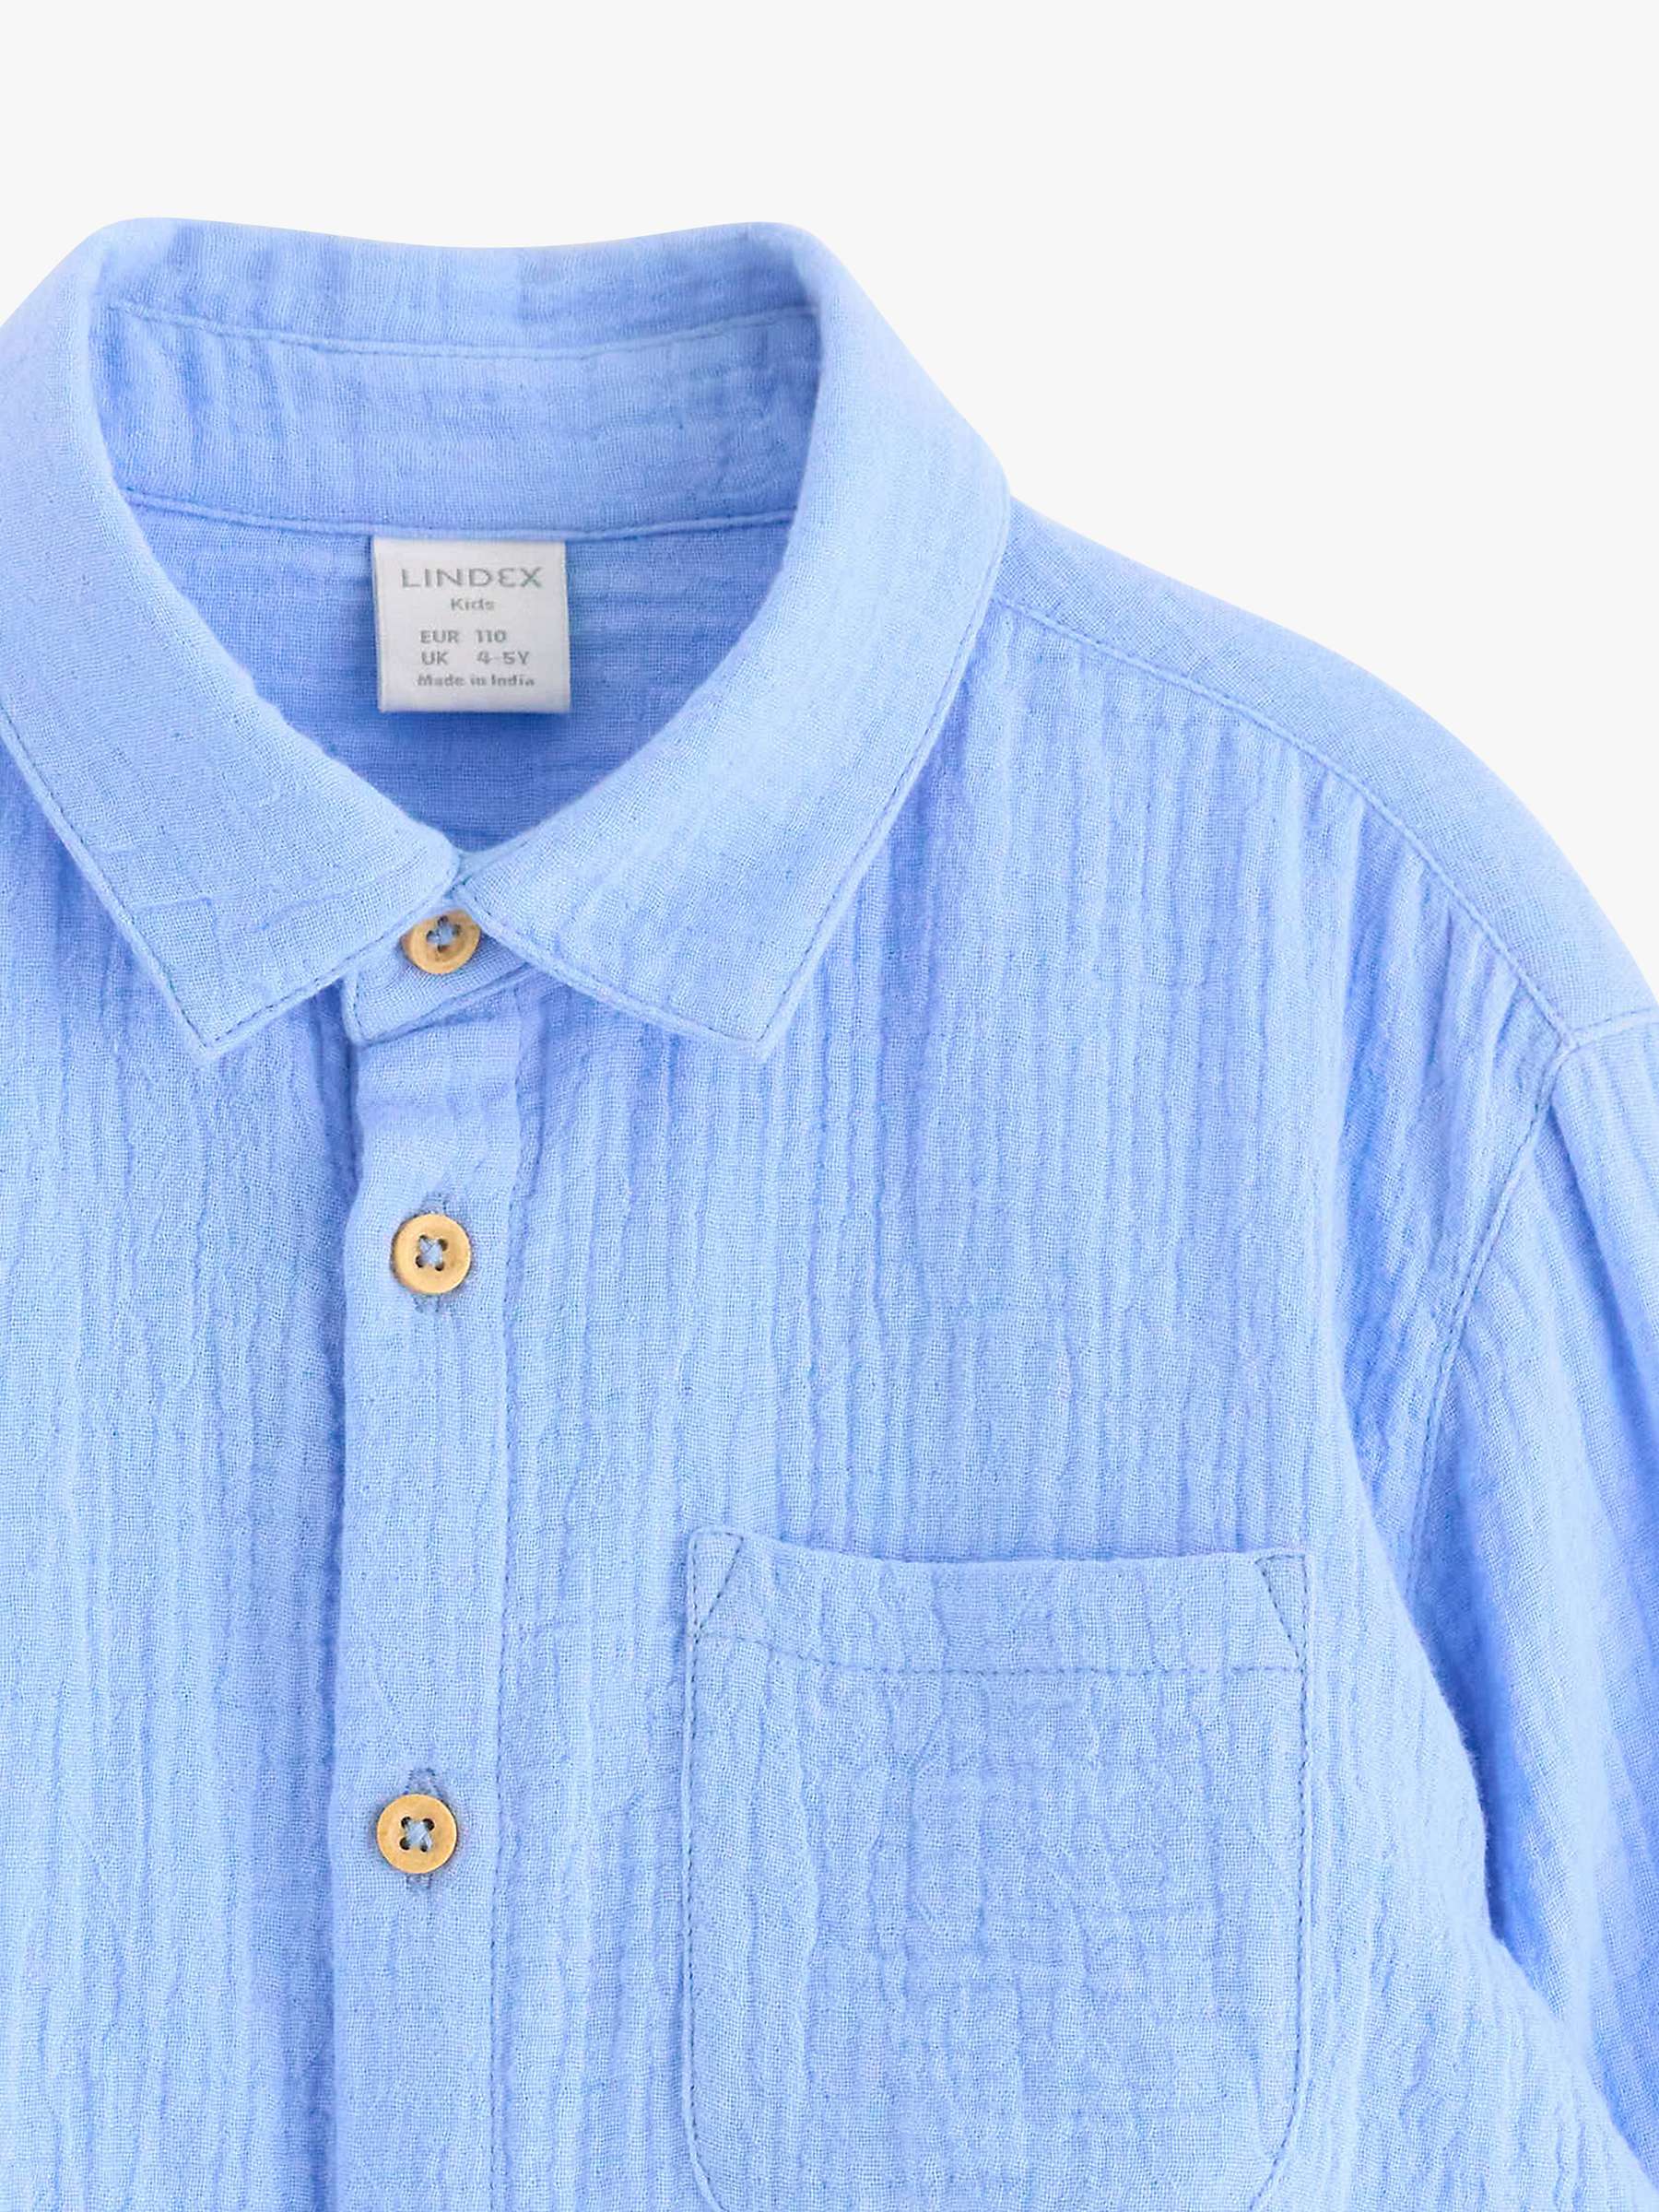 Buy Lindex Kids' Organic Cotton Double Weave Shirt, Light Blue Online at johnlewis.com